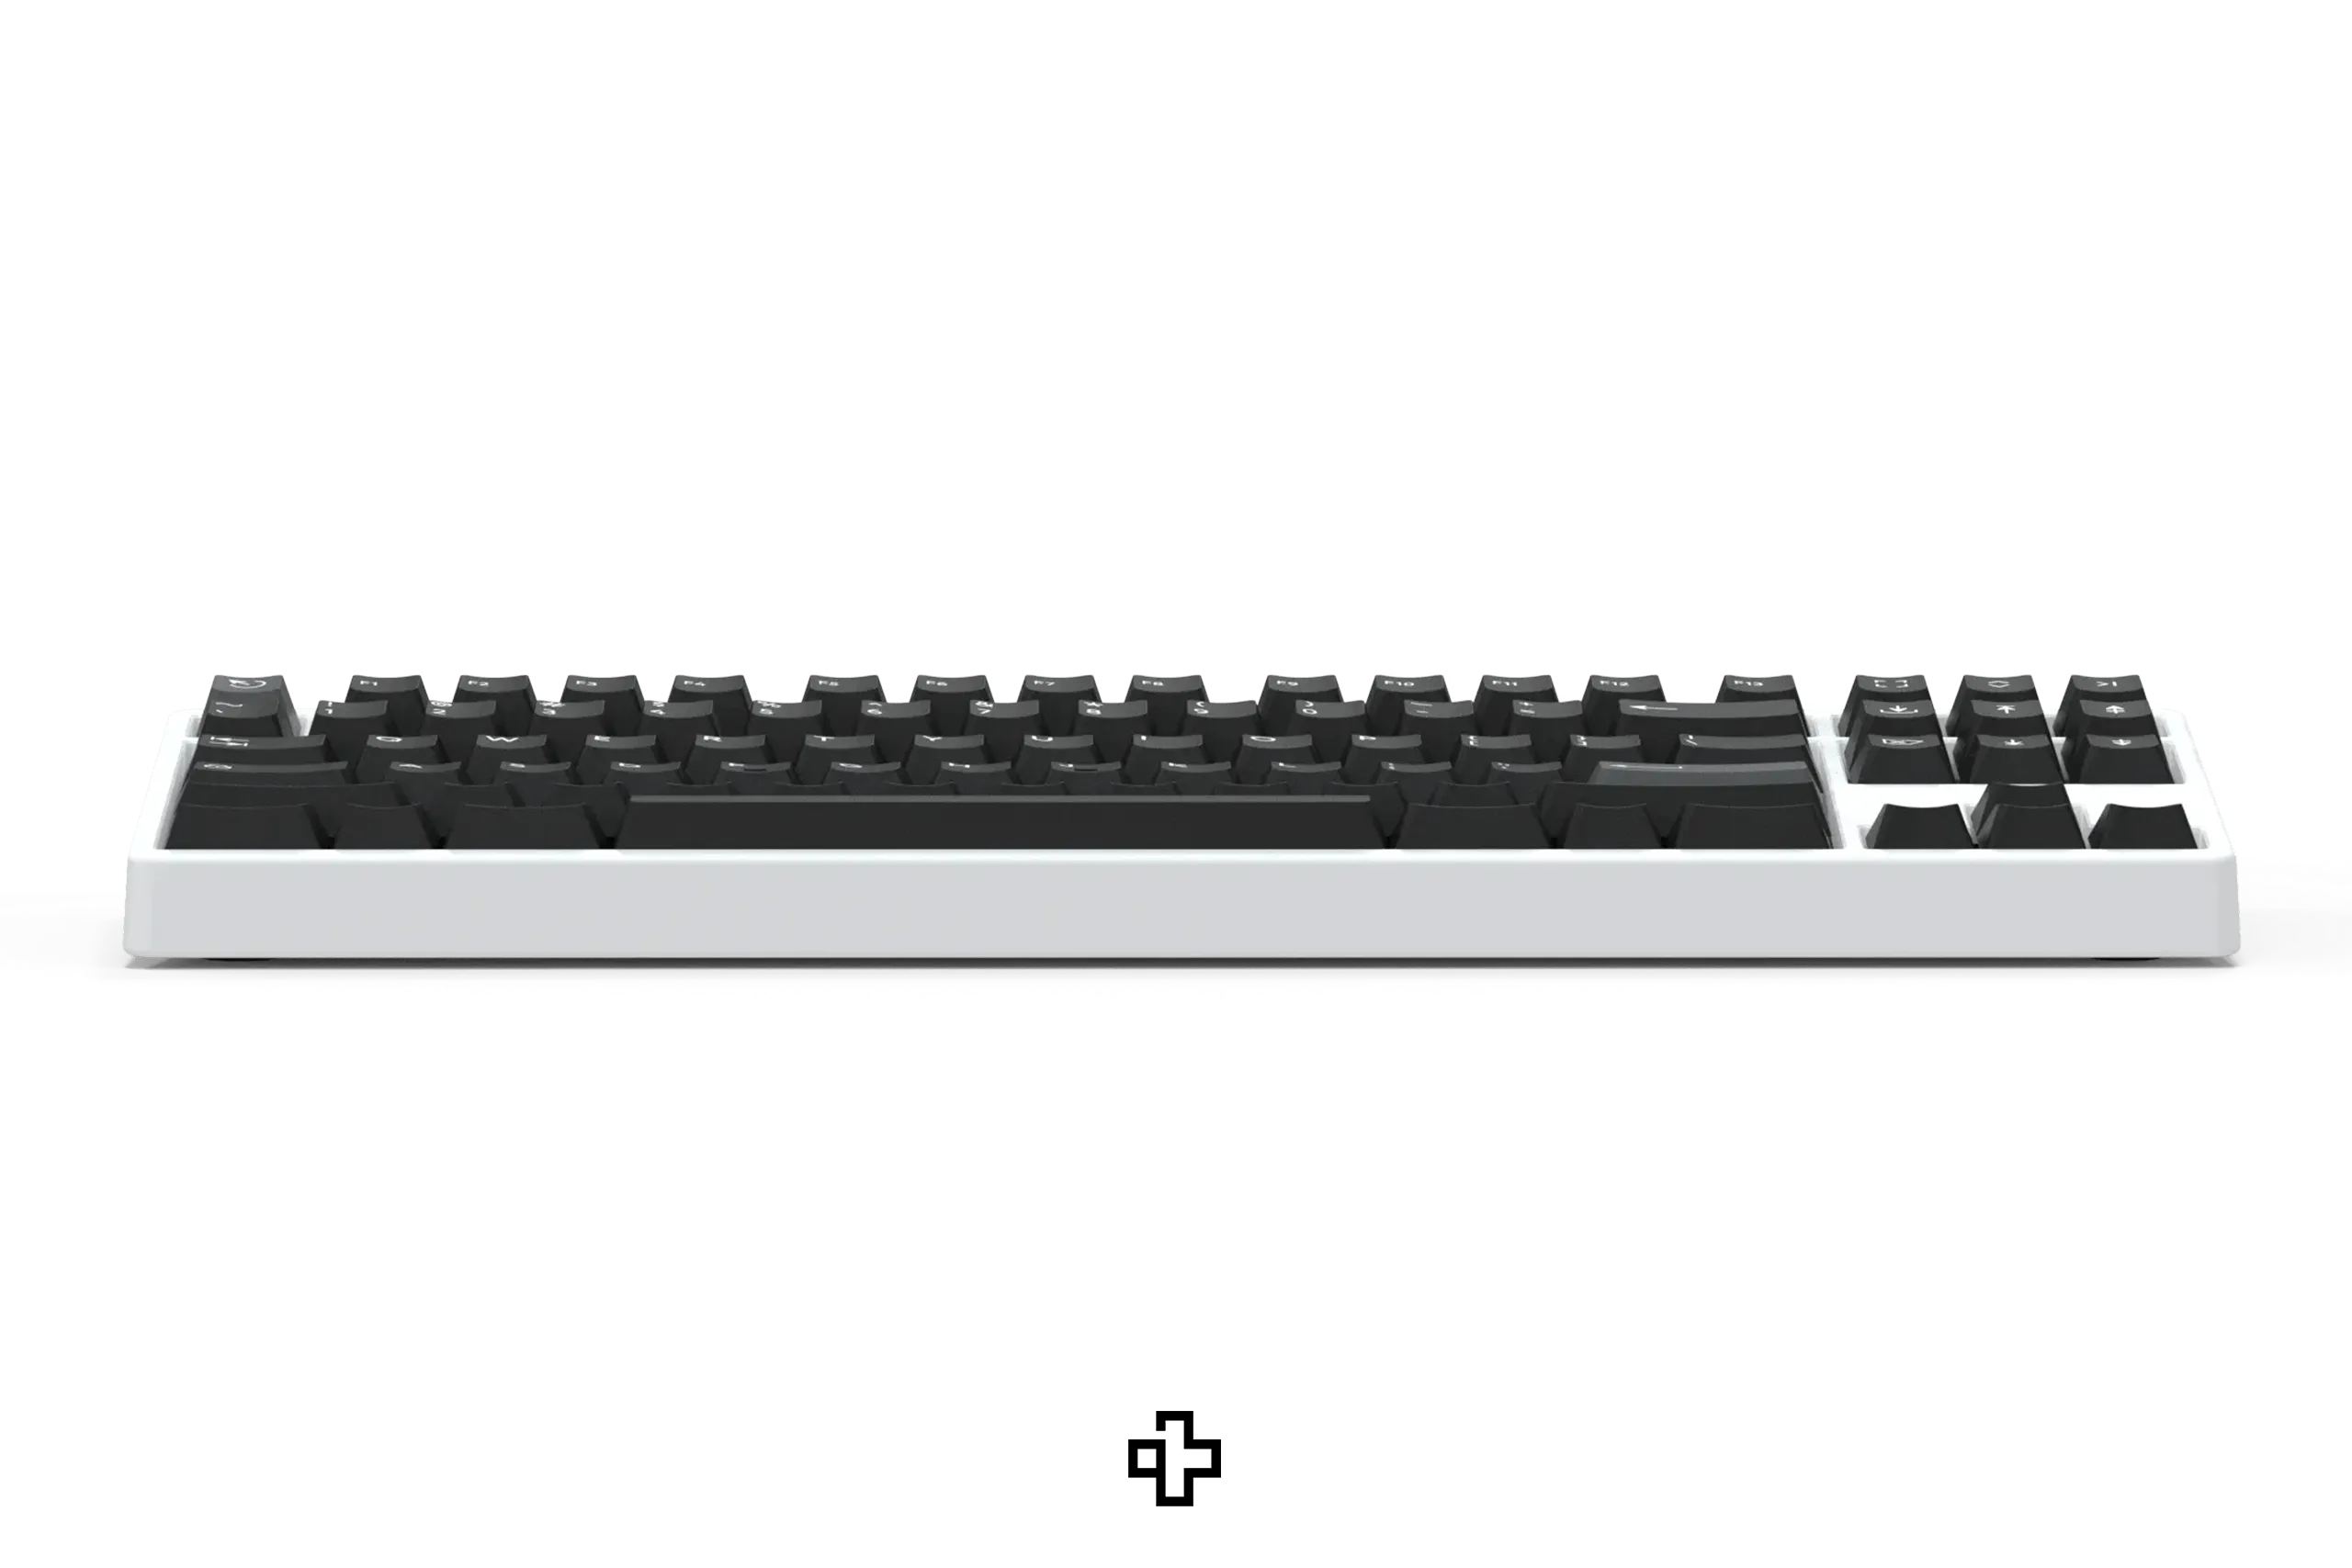 KBDFANS Tiger Lite Mechanical Keyboard Kit